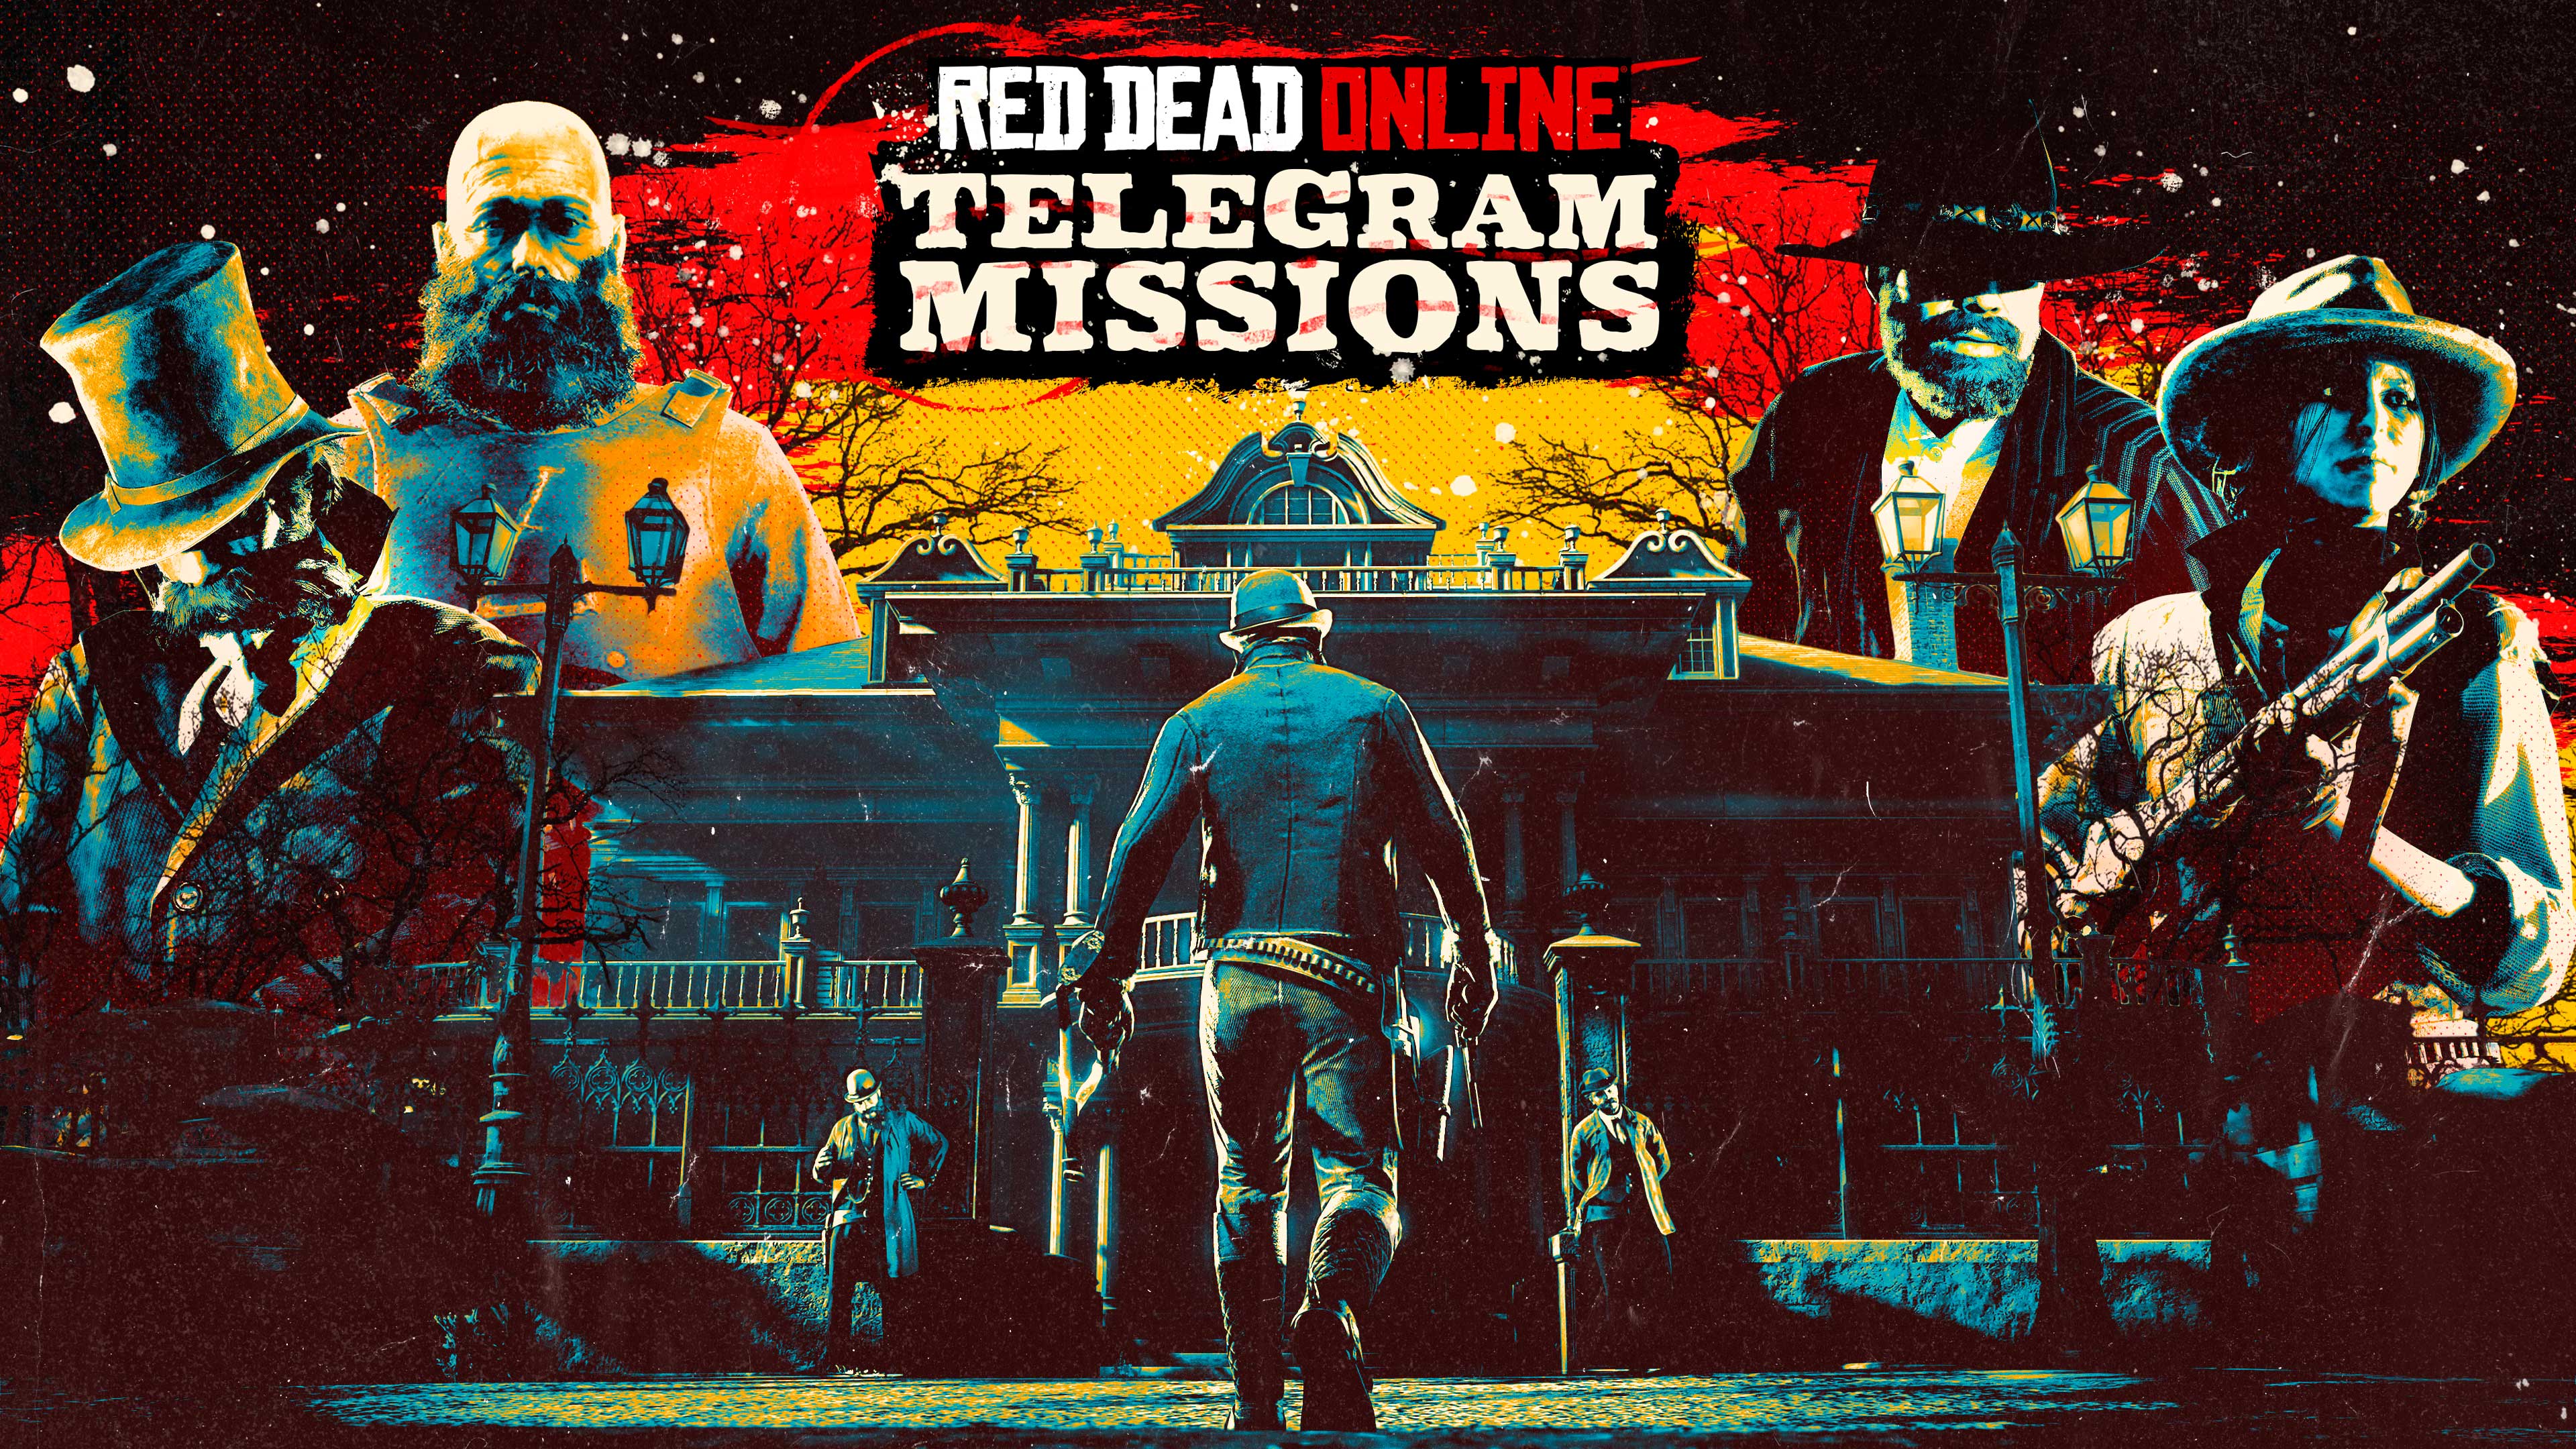 Pôster de missões de telegrama de Red Dead Online